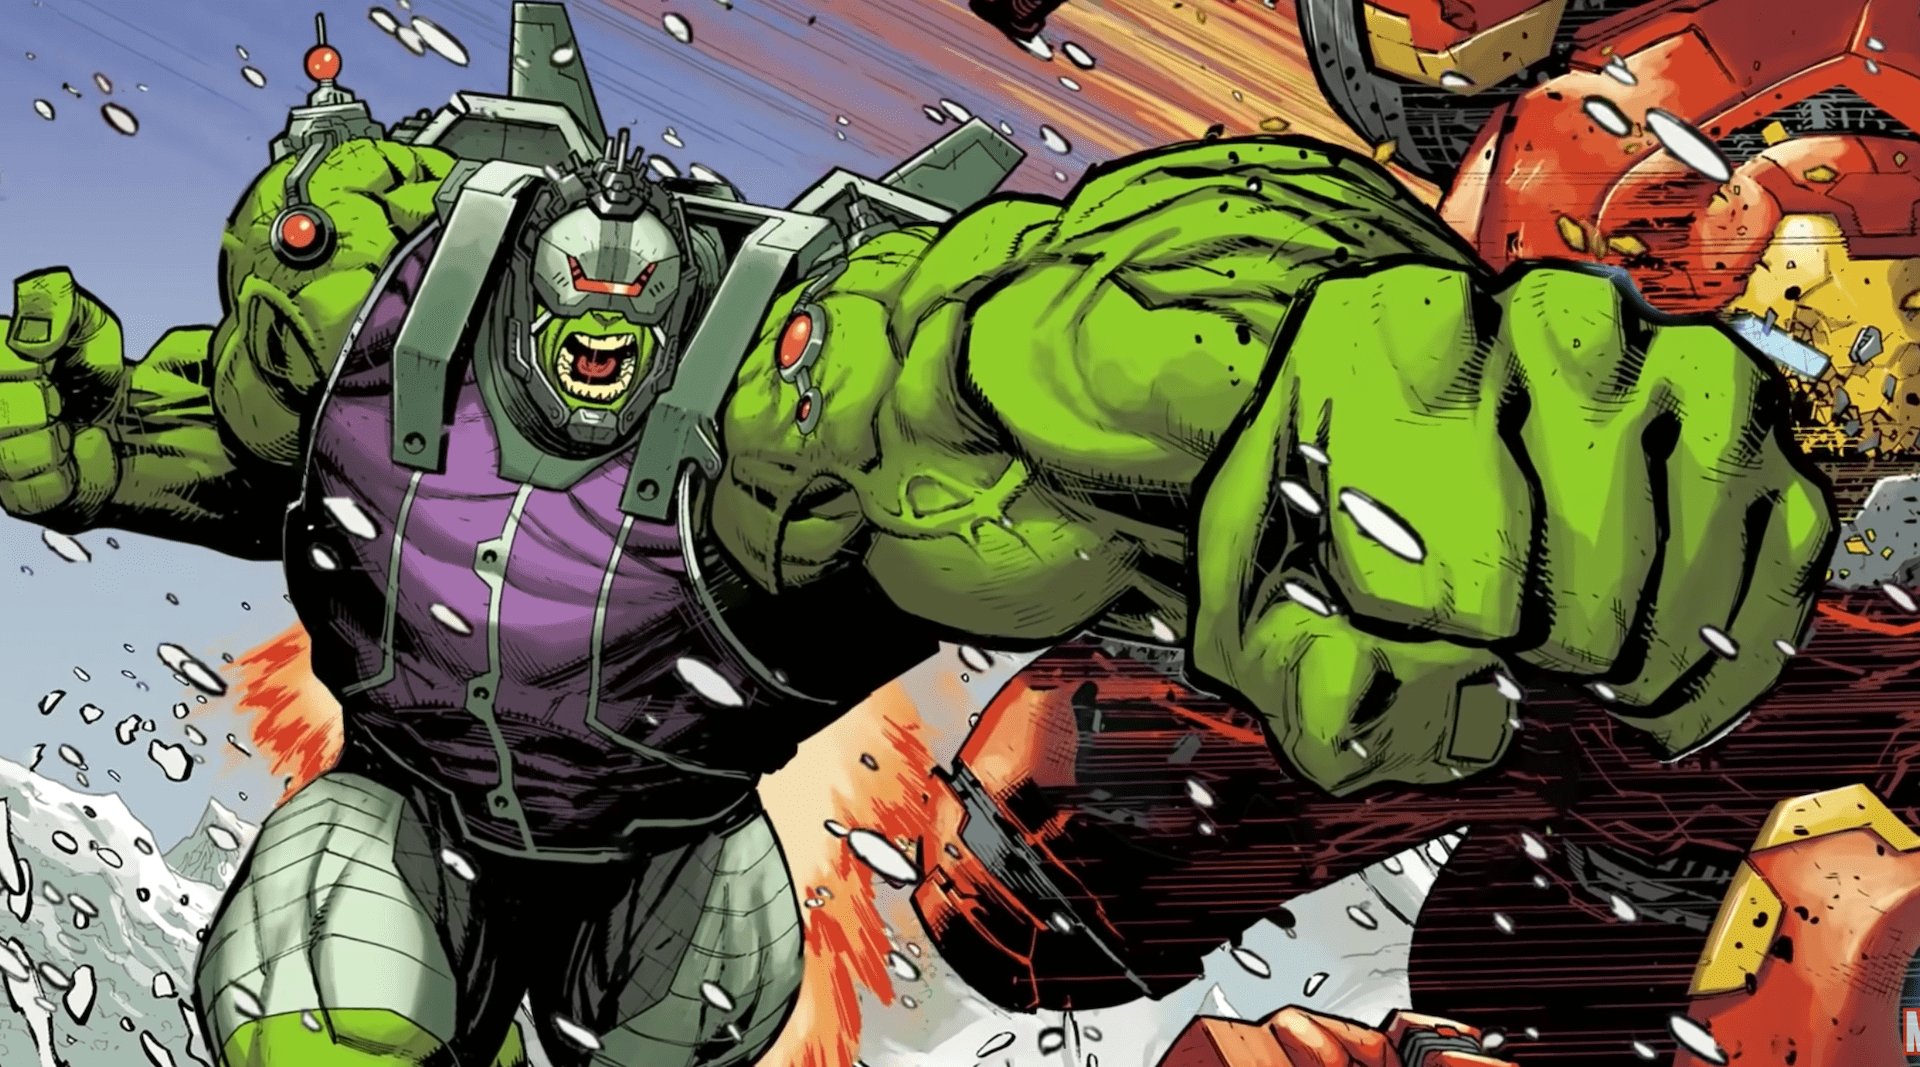 Marvel leans into Hulk's rage in new 'Hulk' #1 trailer